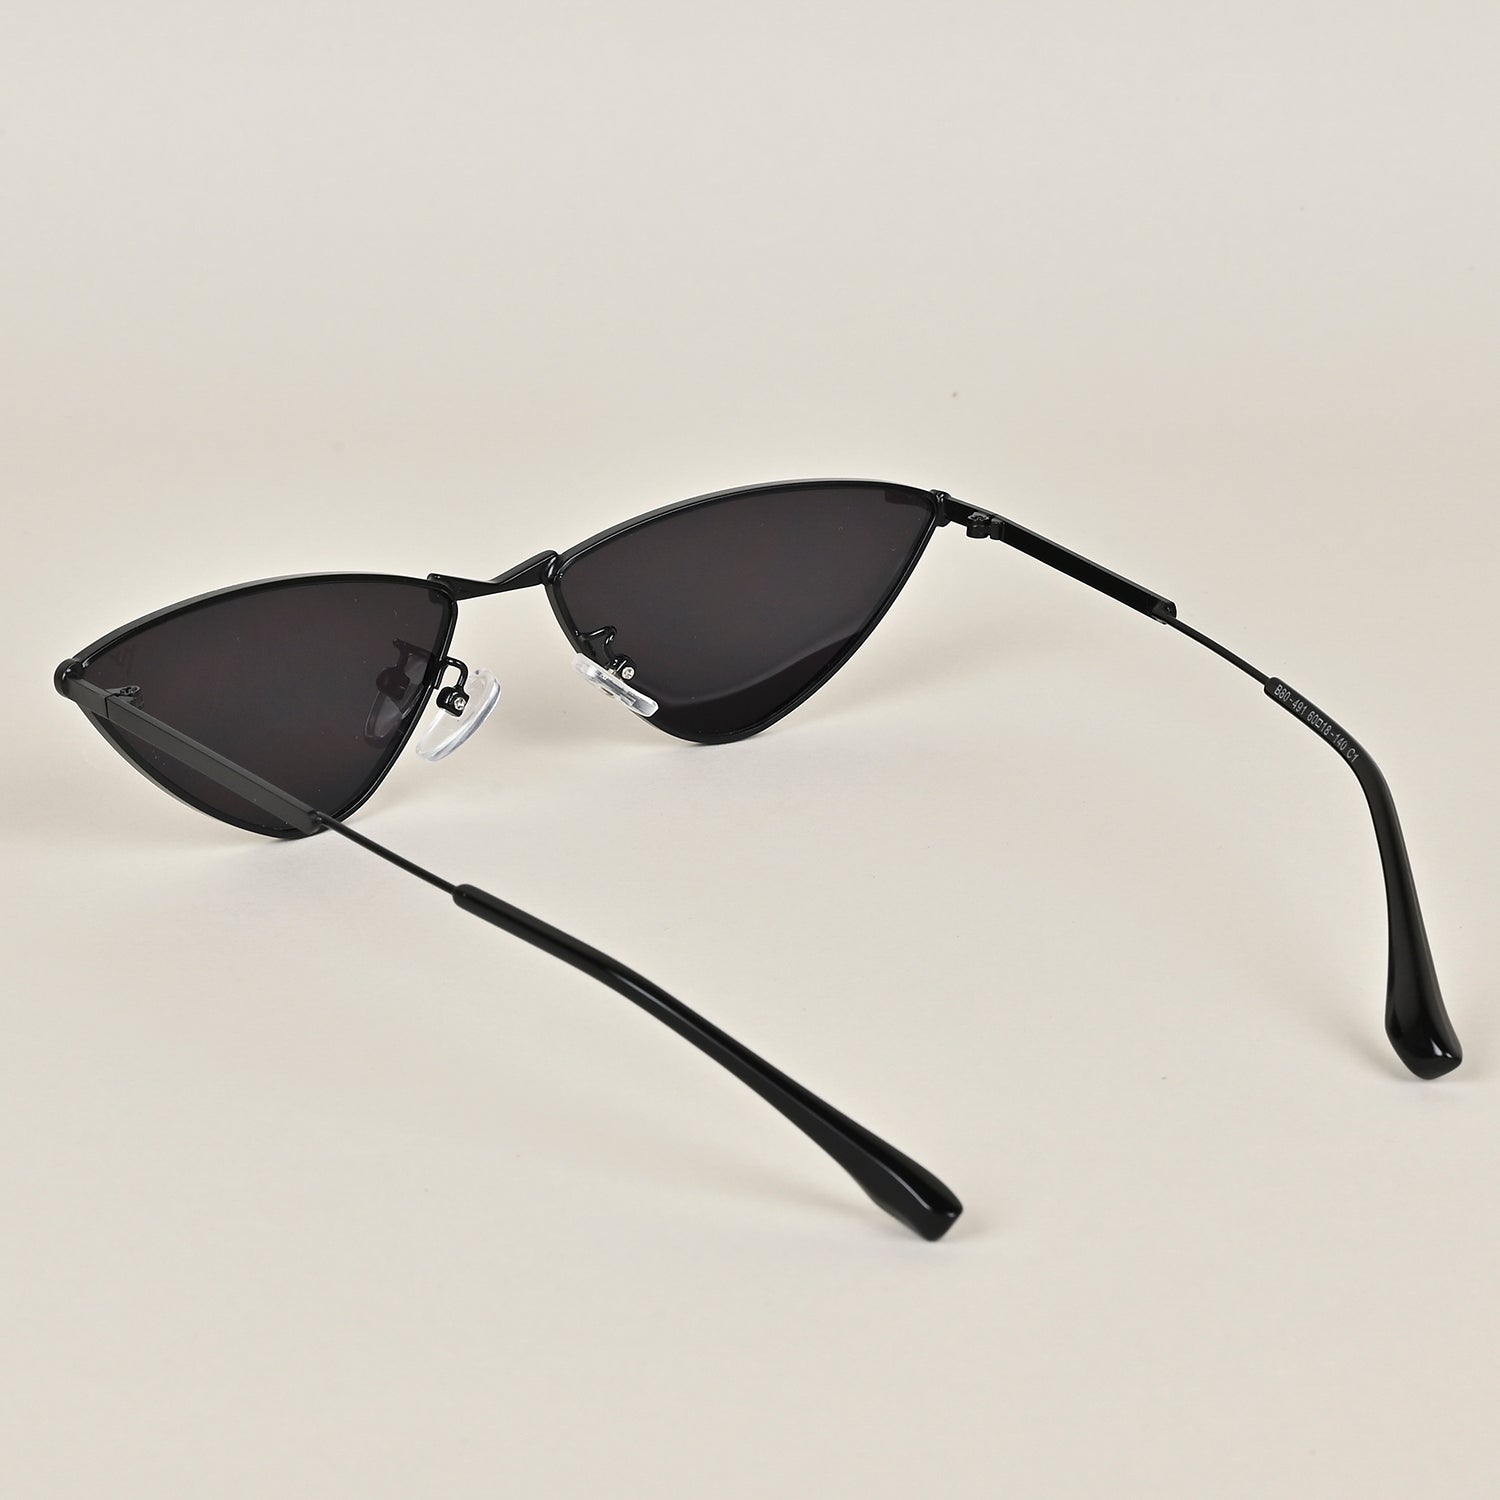 Voyage Black Cateye Sunglasses - MG3437